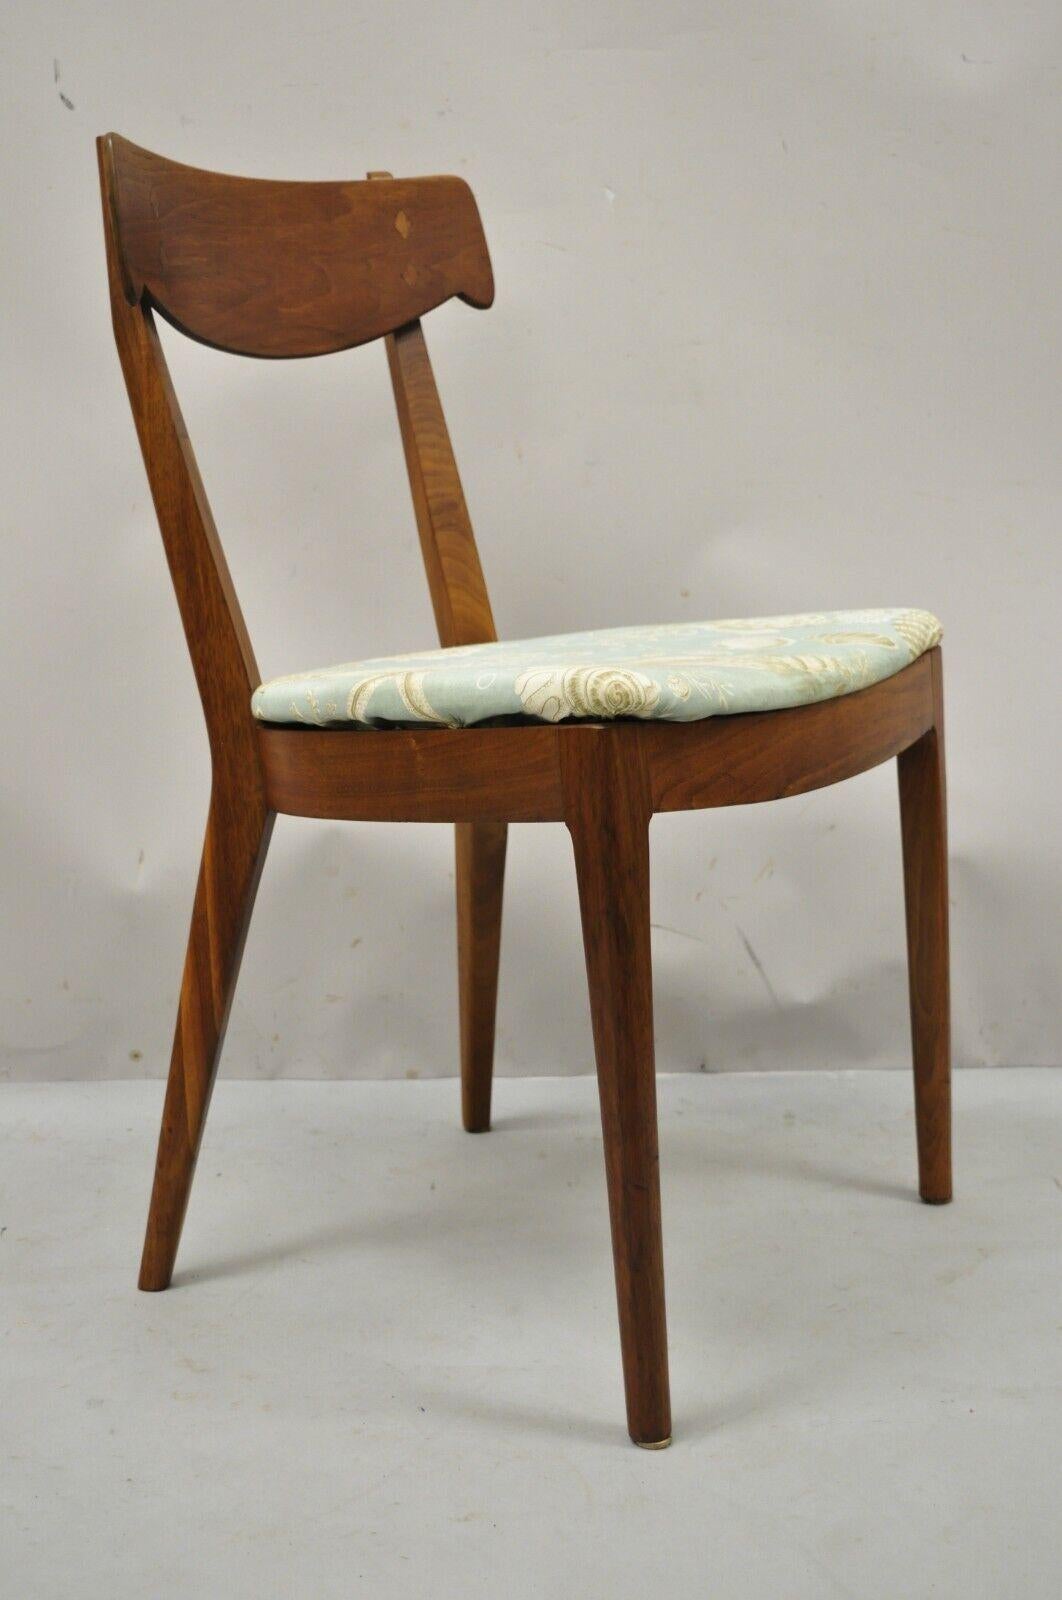 Drexel Declaration Kipp Stewart Walnut Diamond Inlay Dining Side Chair - Single. Item features diamond inlay to backrest, beautiful woodgrain, tapered legs, very nice vintage item, sleek sculptural form. Circa mid 20th Century. Measurements: 32